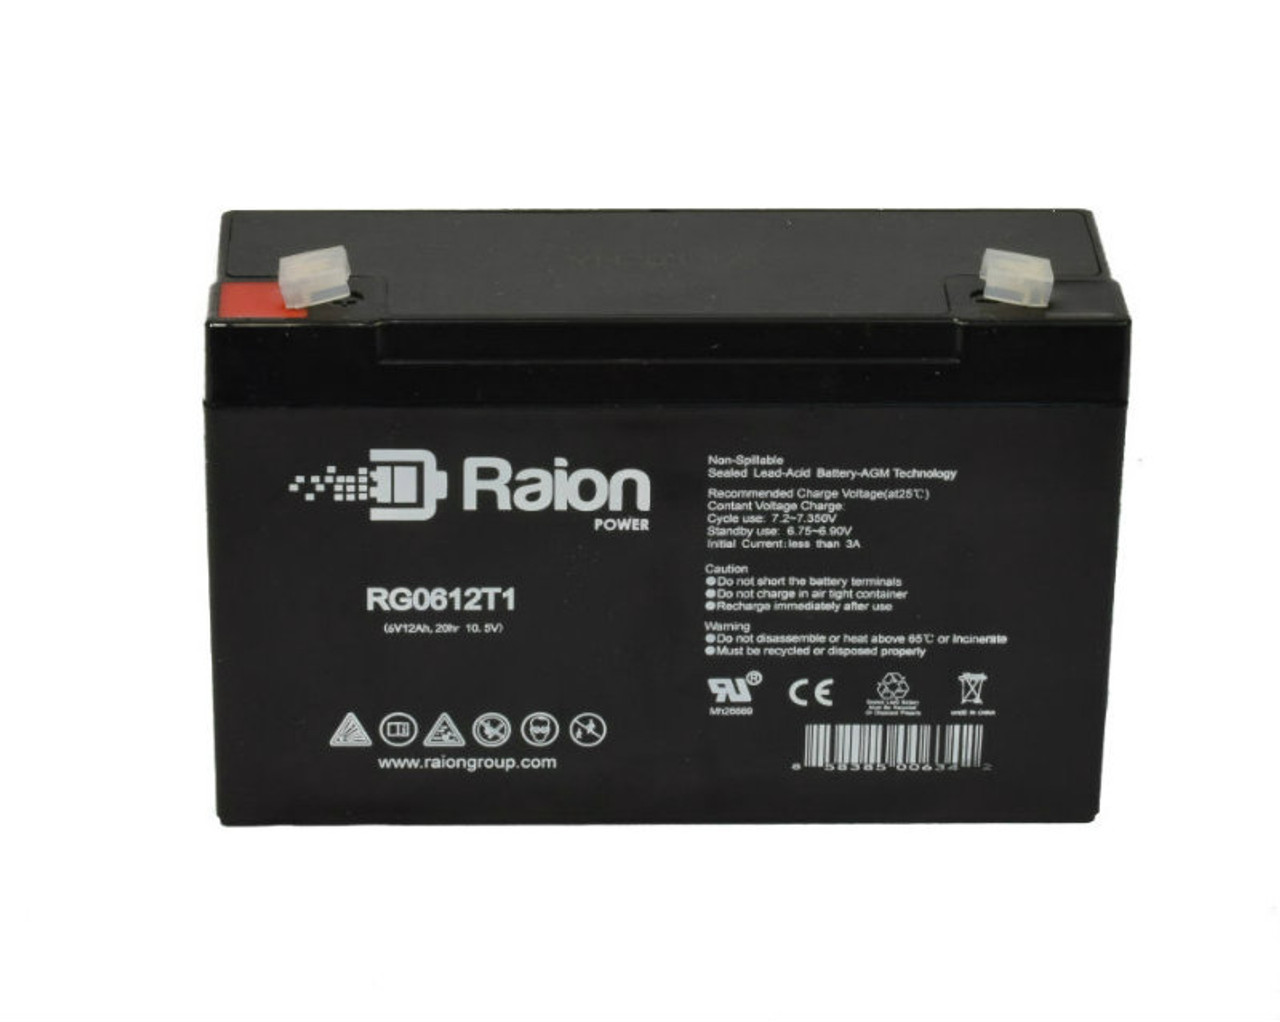 Raion Power RG06120T1 SLA Battery for Technacell EP1295